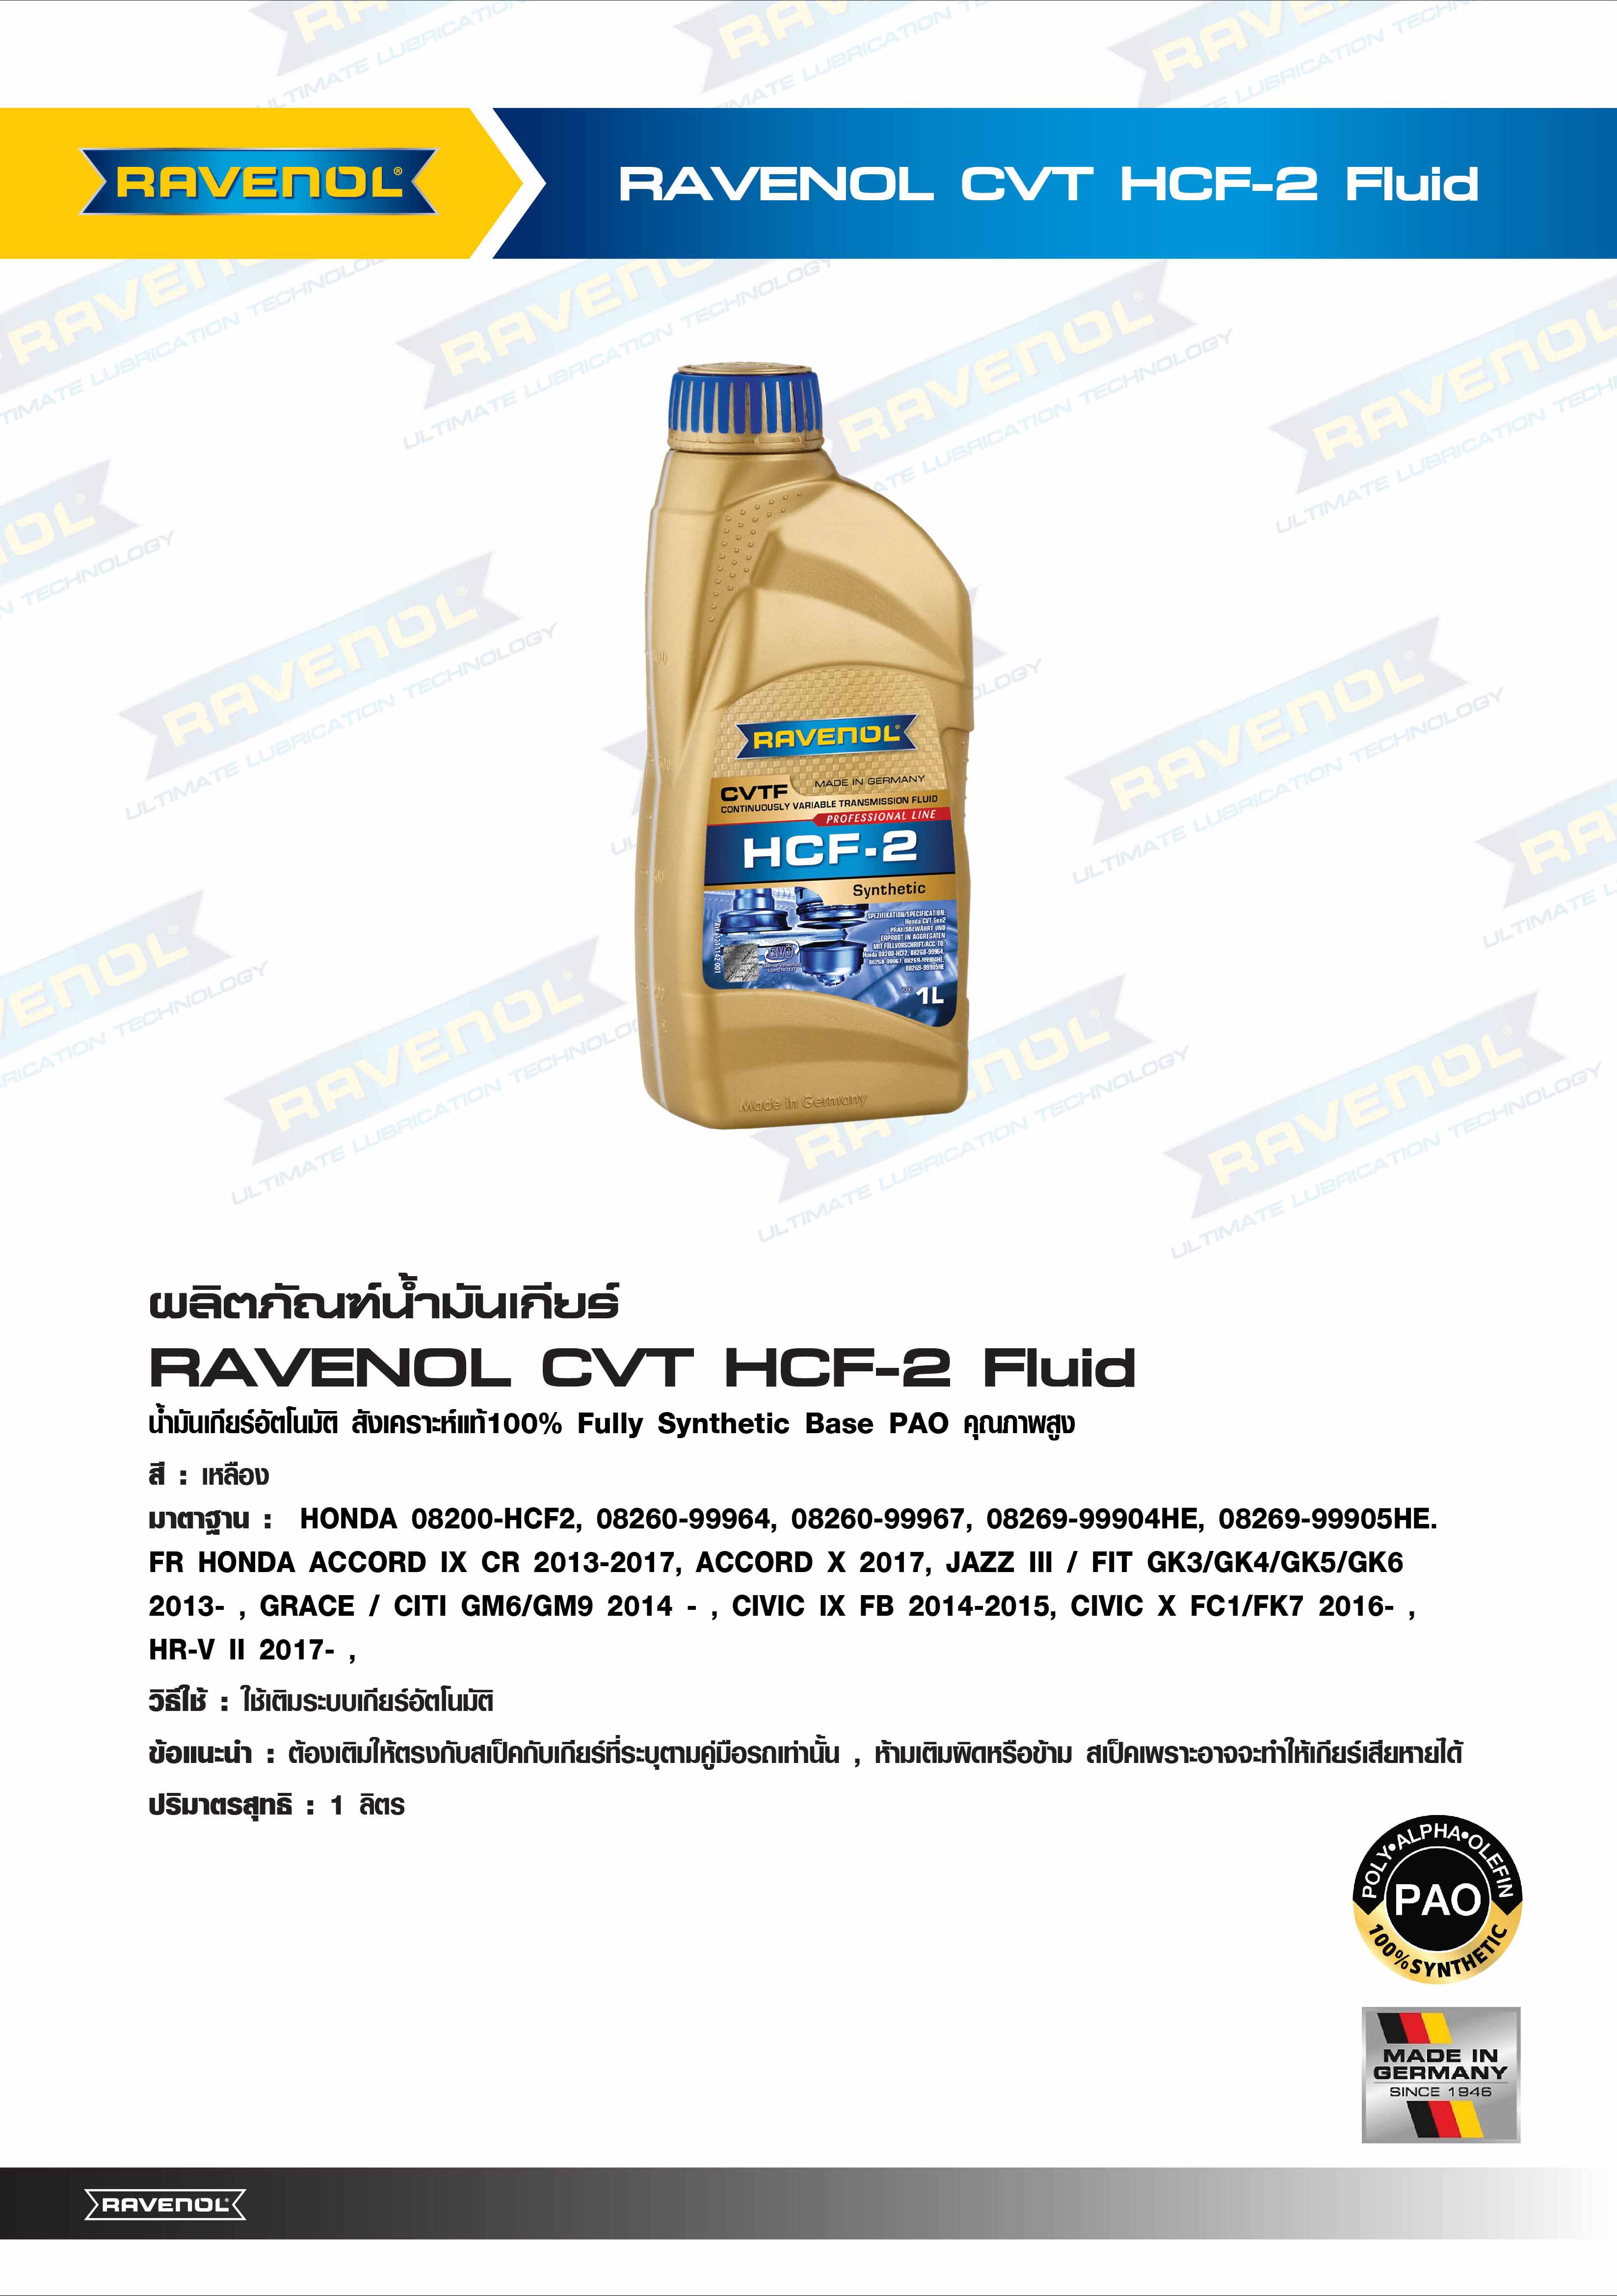 RAVENOL CVT HCF 2 Fluid